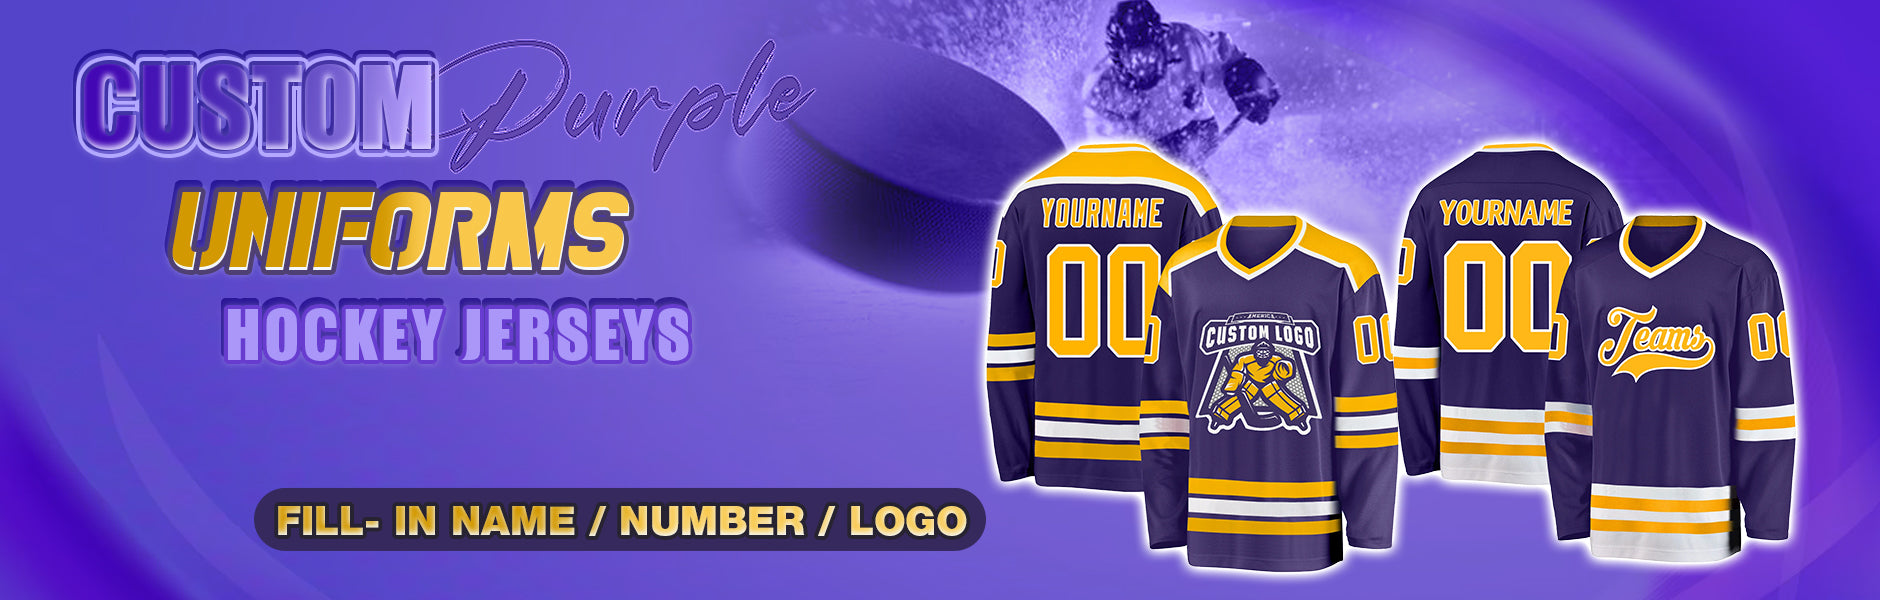 Custom Mobile Mysticks Hockey Jersey - Purple